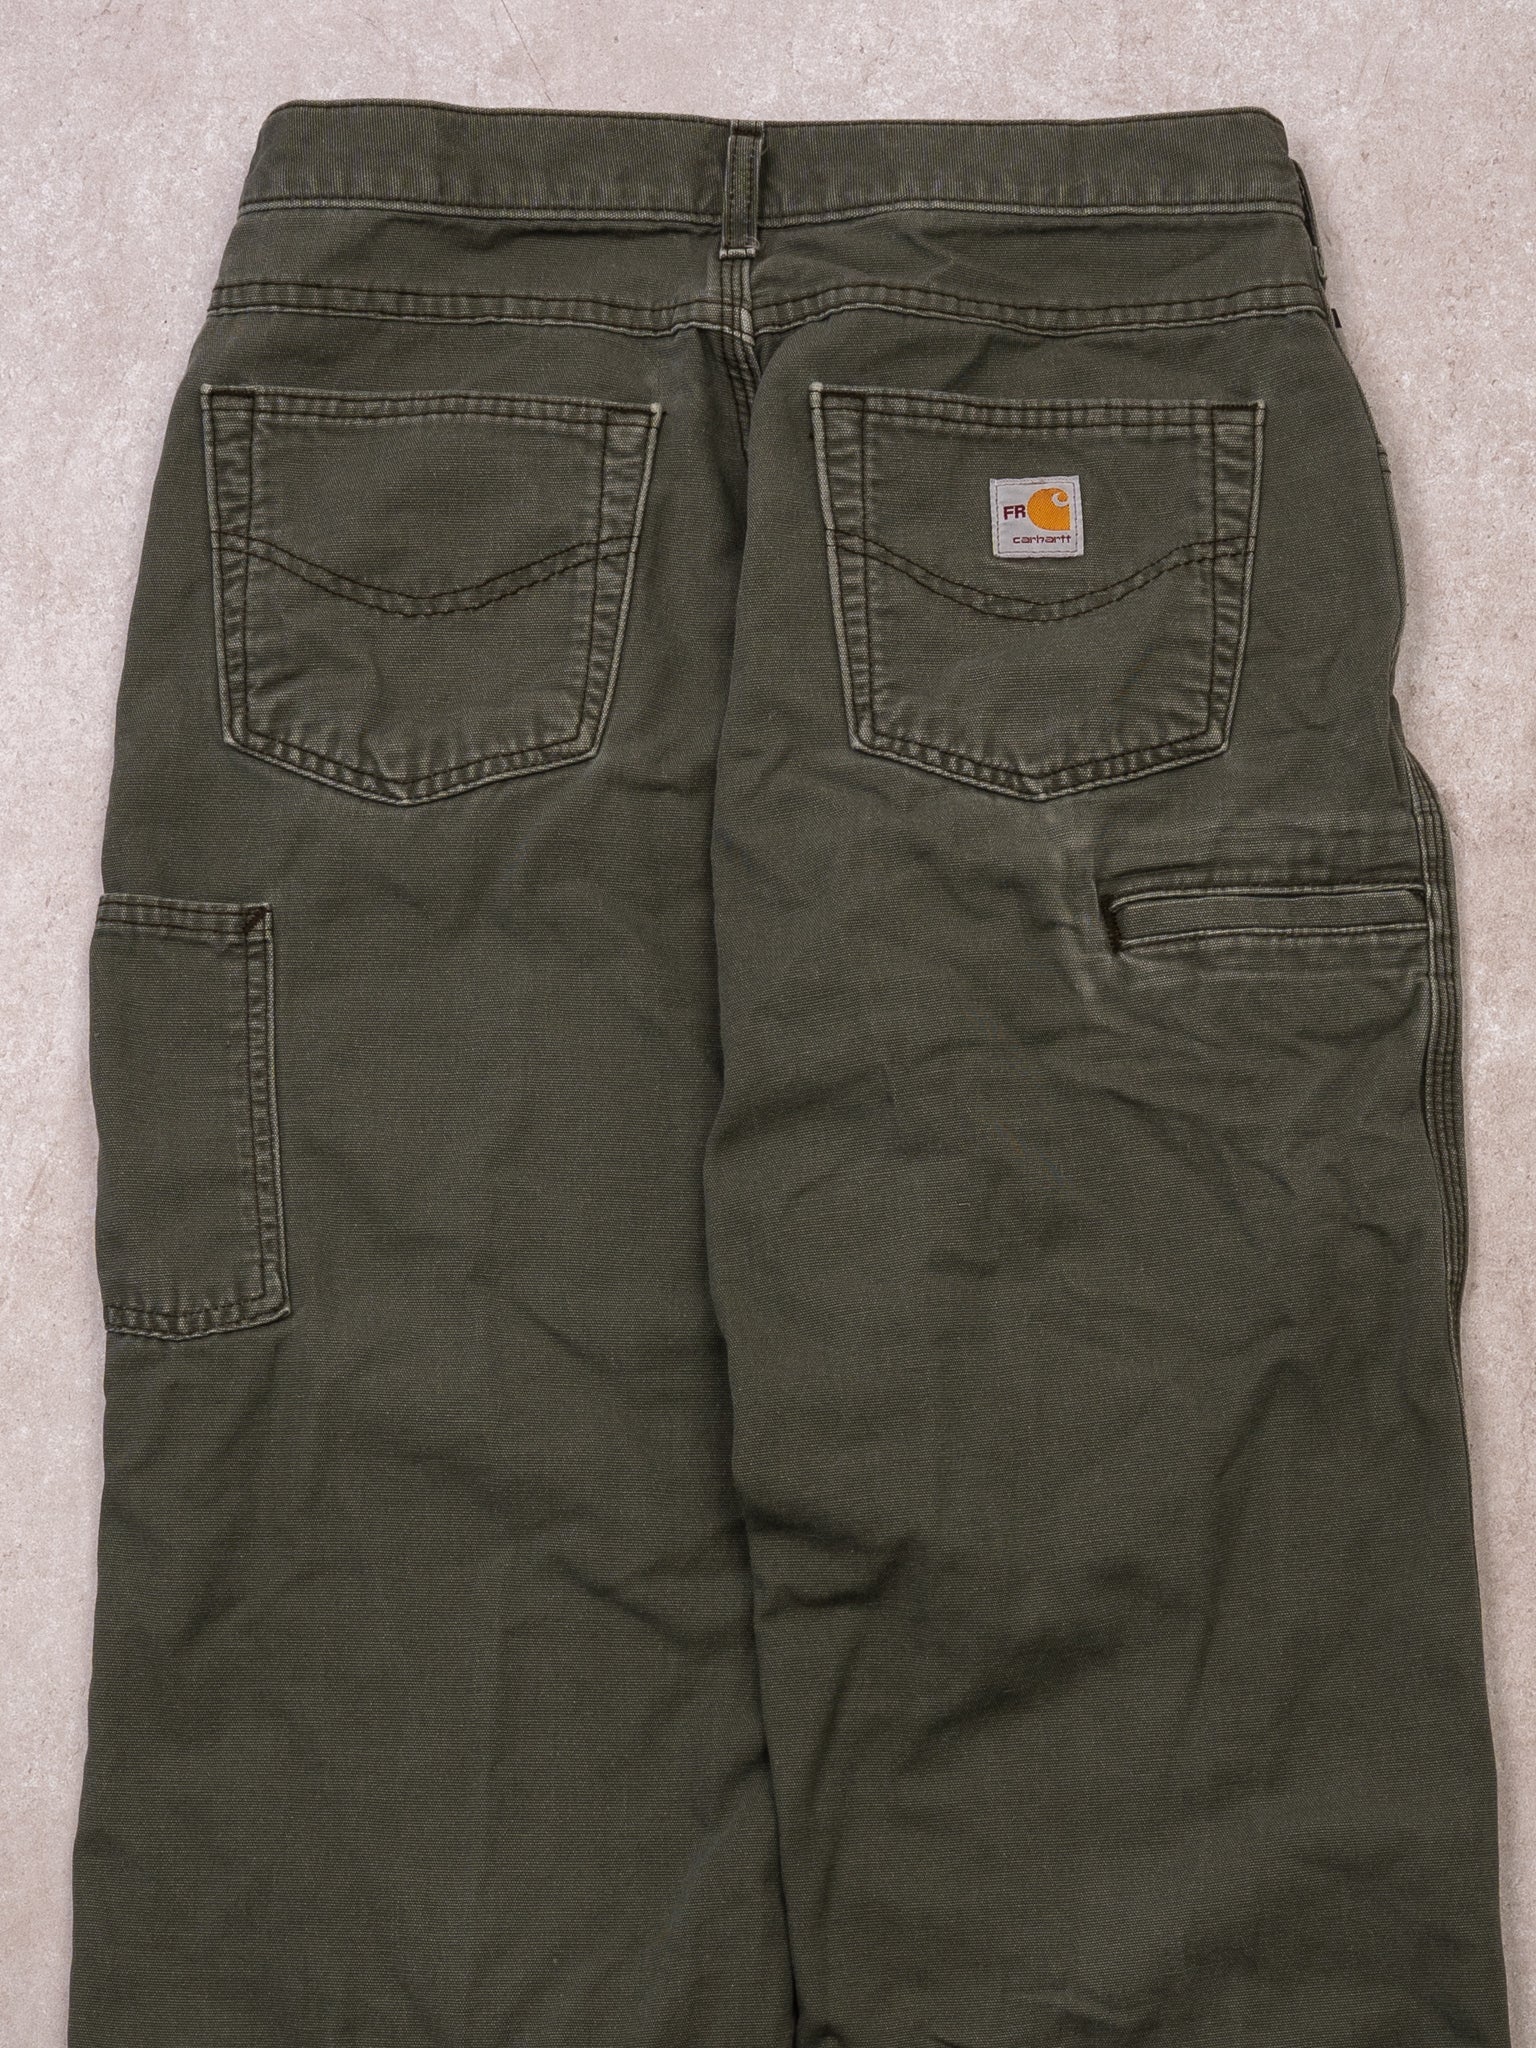 Vintage Washed Green Original Fit FR Carhartt Cargo Pants (30 x 30)